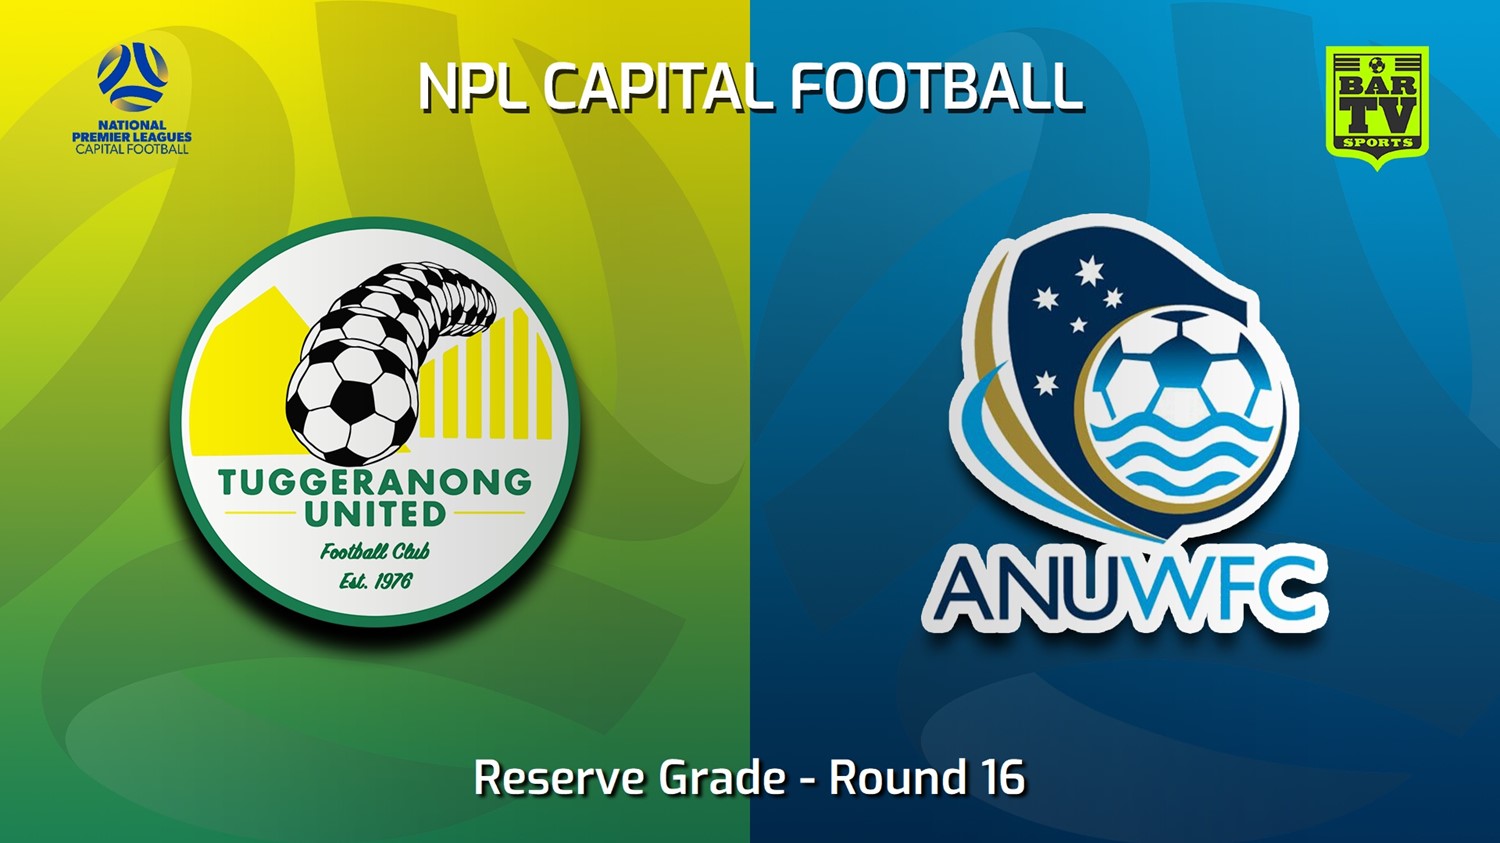 230730-NPL Women - Reserve Grade - Capital Football Round 16 - Tuggeranong United FC (women) v ANU WFC (women) Minigame Slate Image